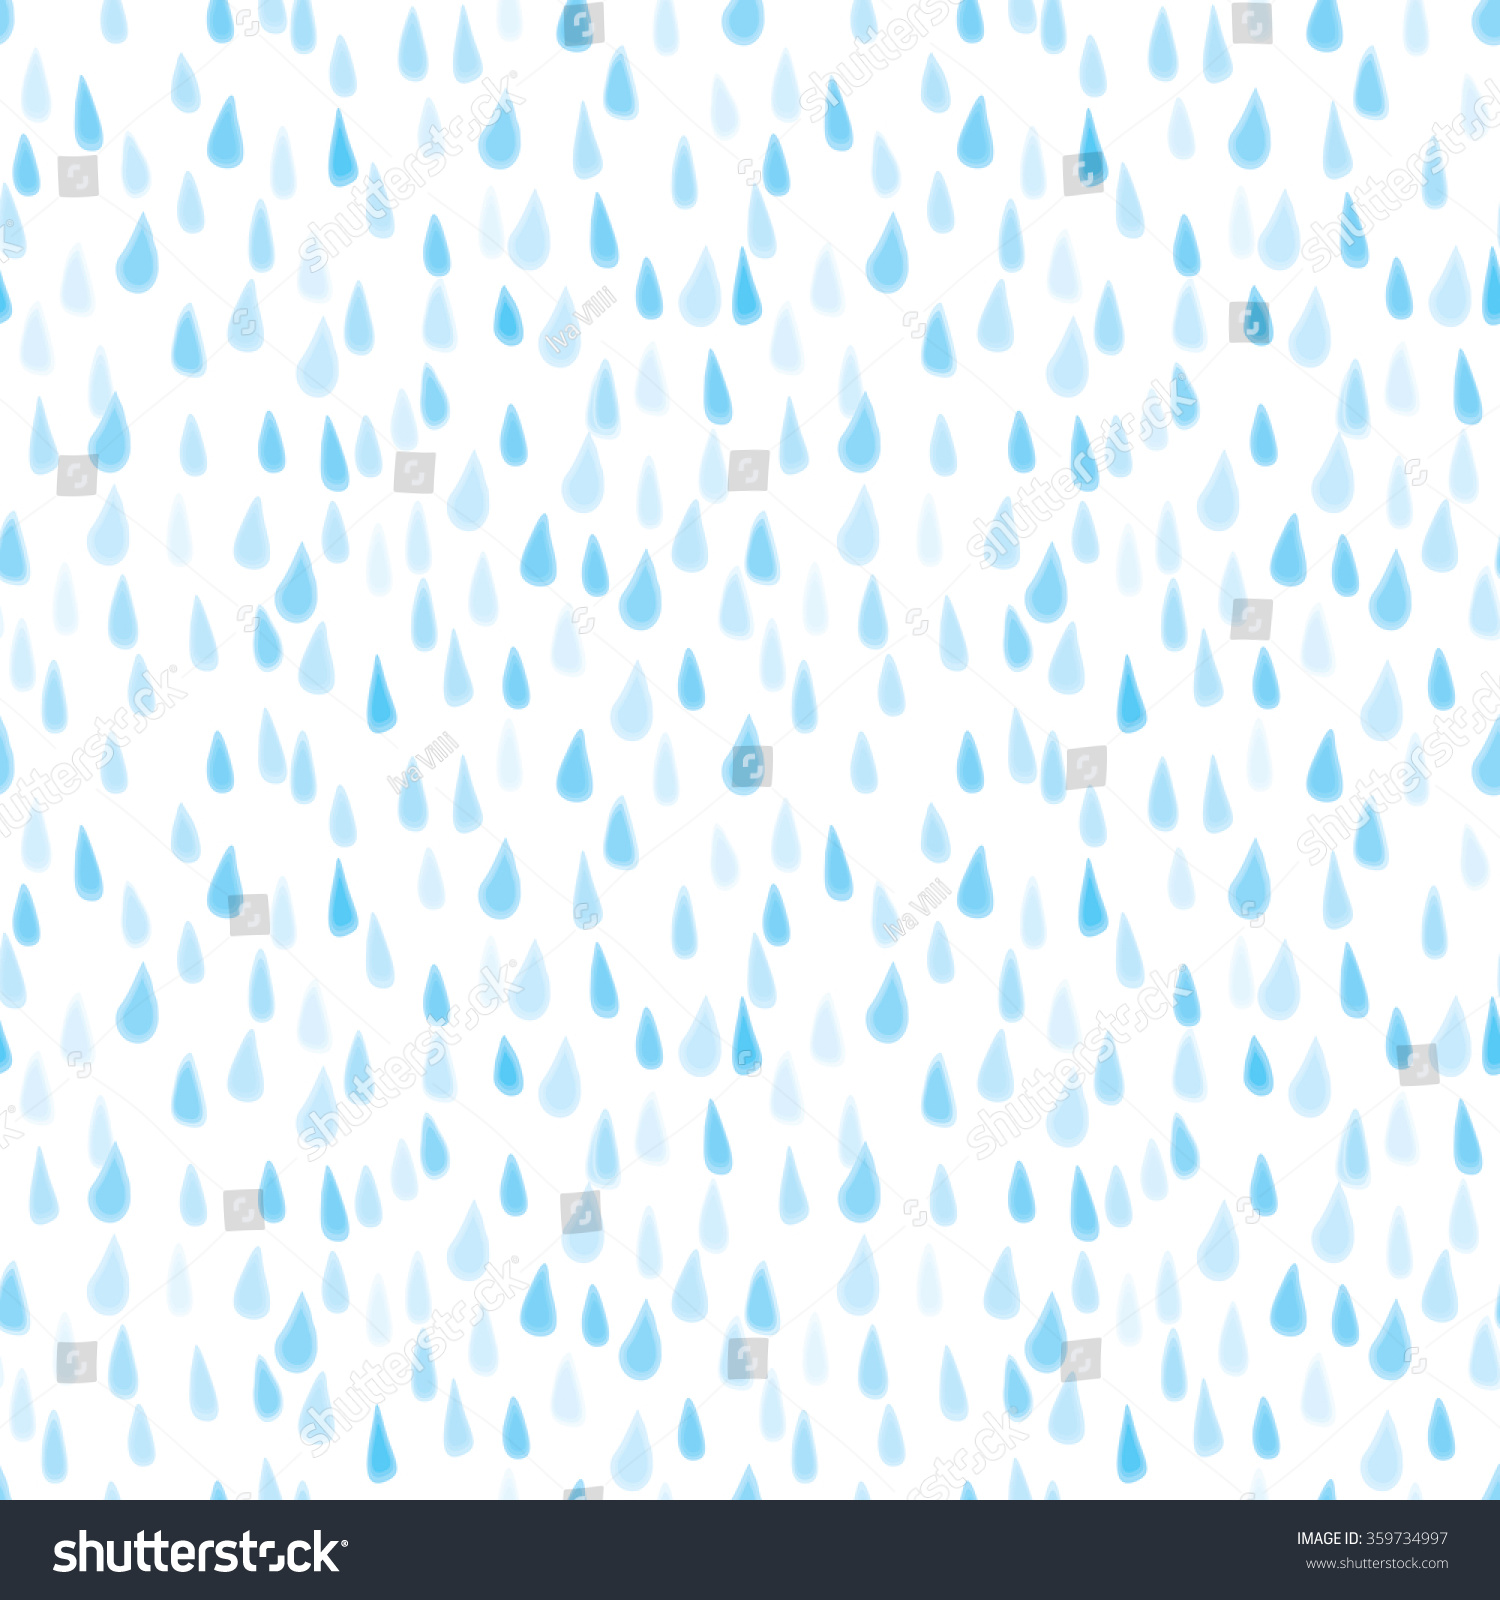 Seamless Illustrated Pattern Made Hand Drawn Rain Drops Stock Vector ...